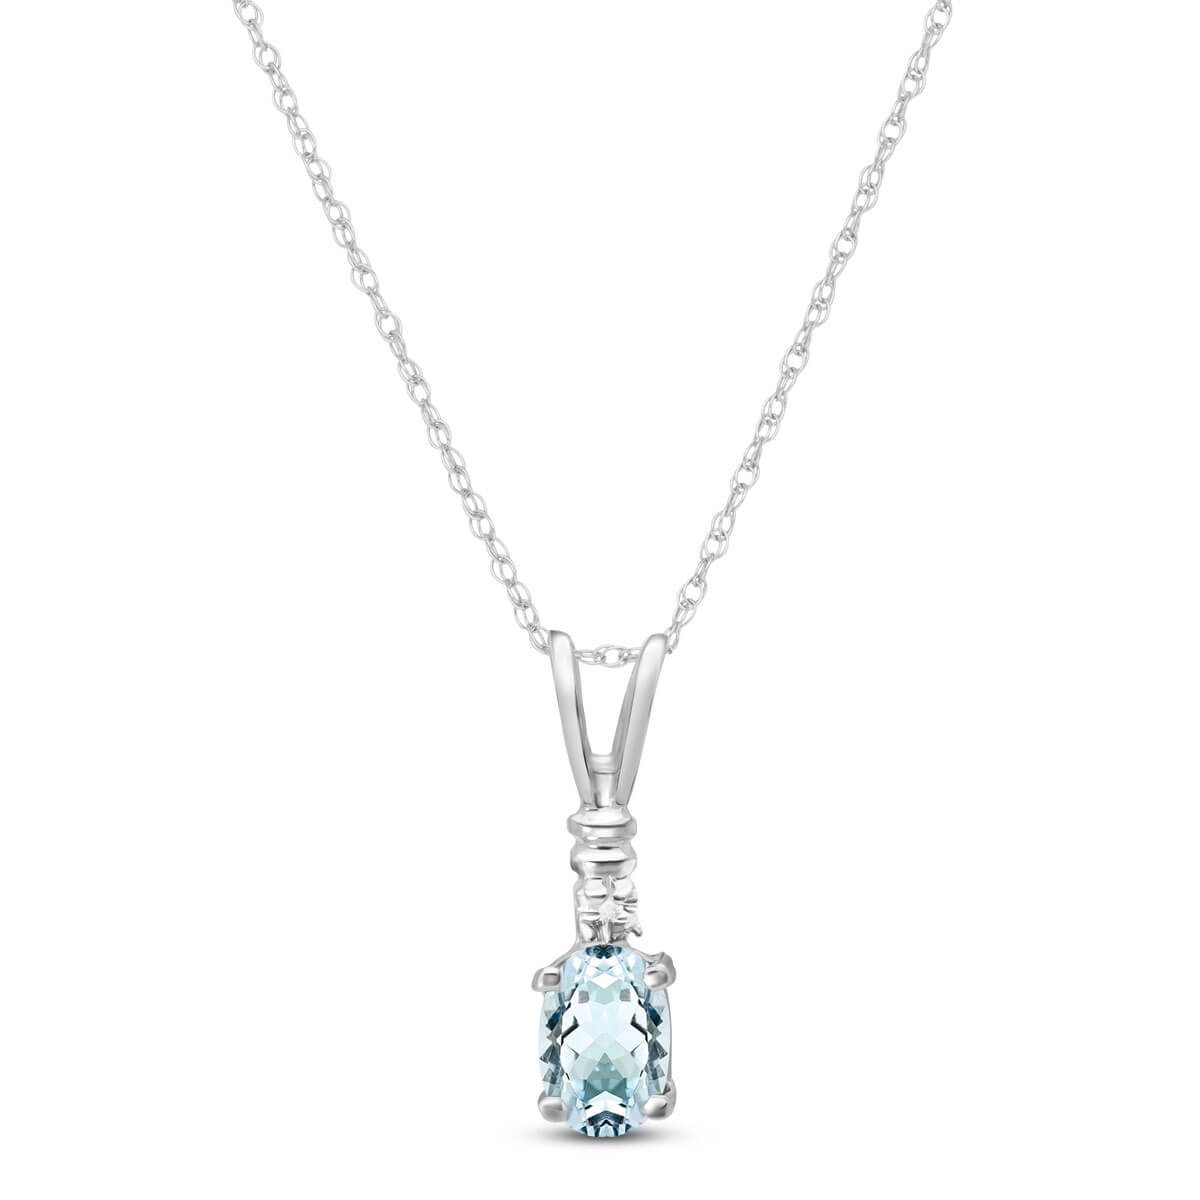 Aquamarine & Diamond Cap Oval Pendant Necklace in 9ct White Gold